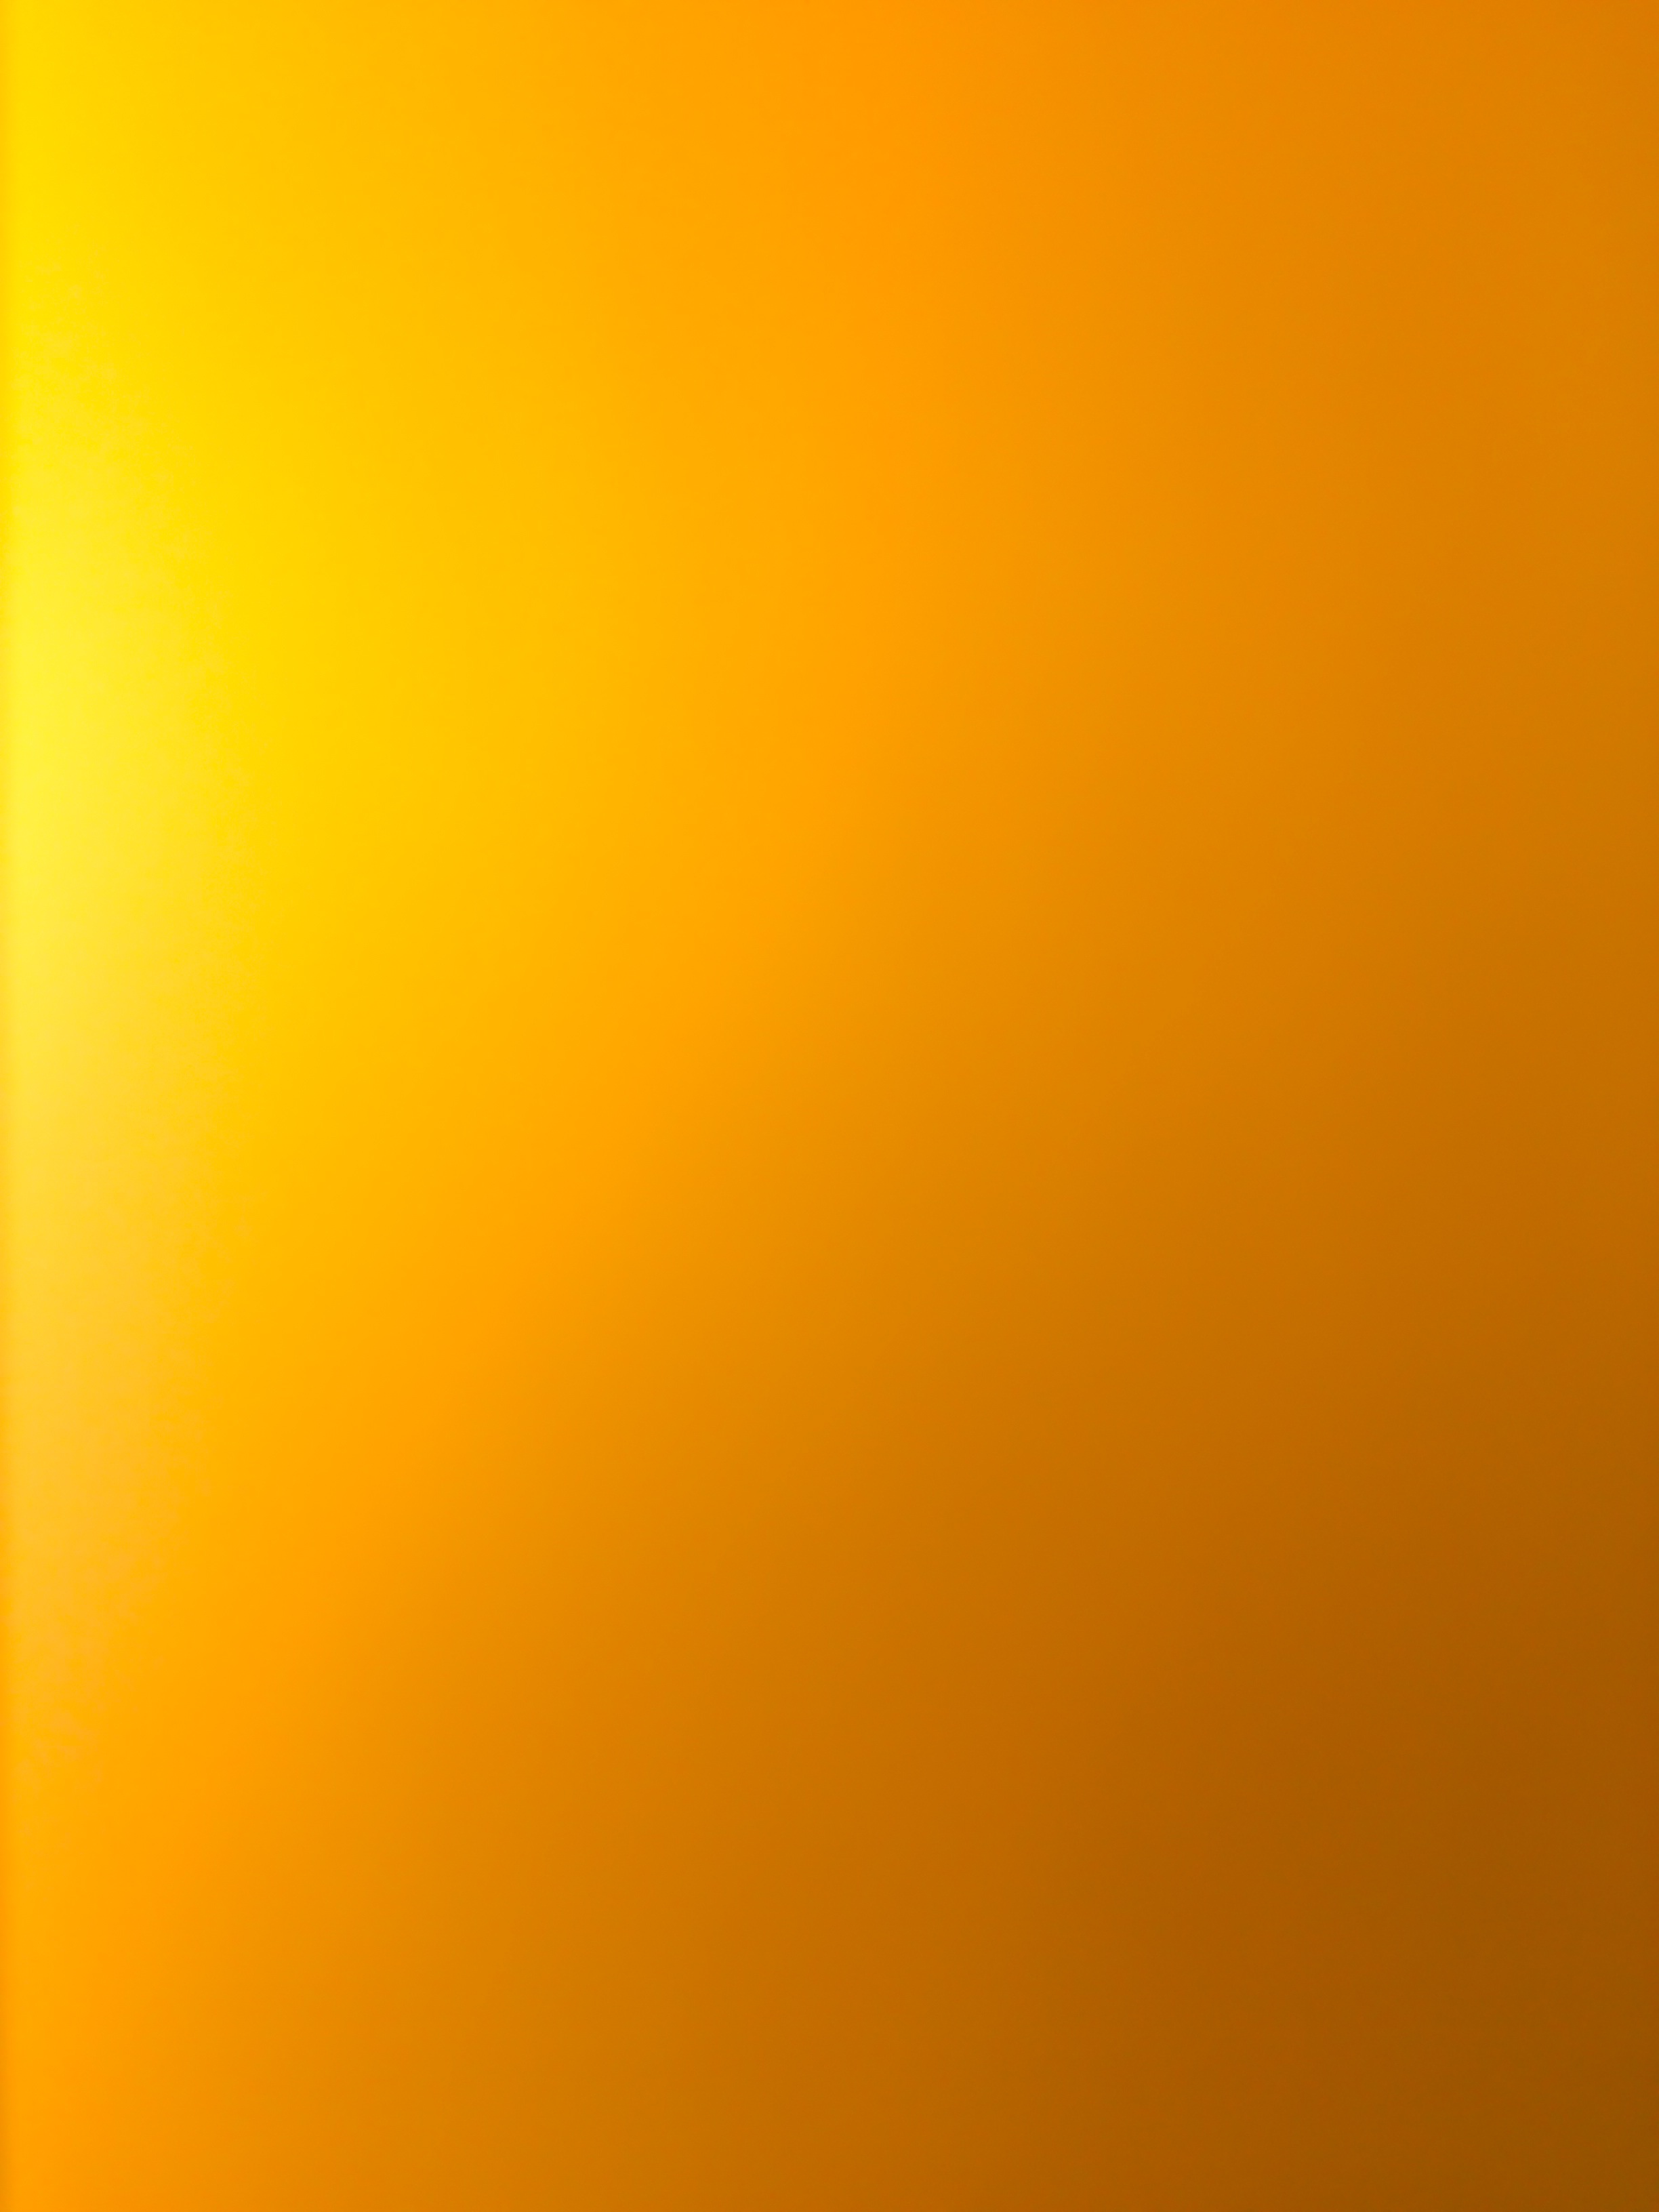 kuning carta da parati,arancia,giallo,ambra